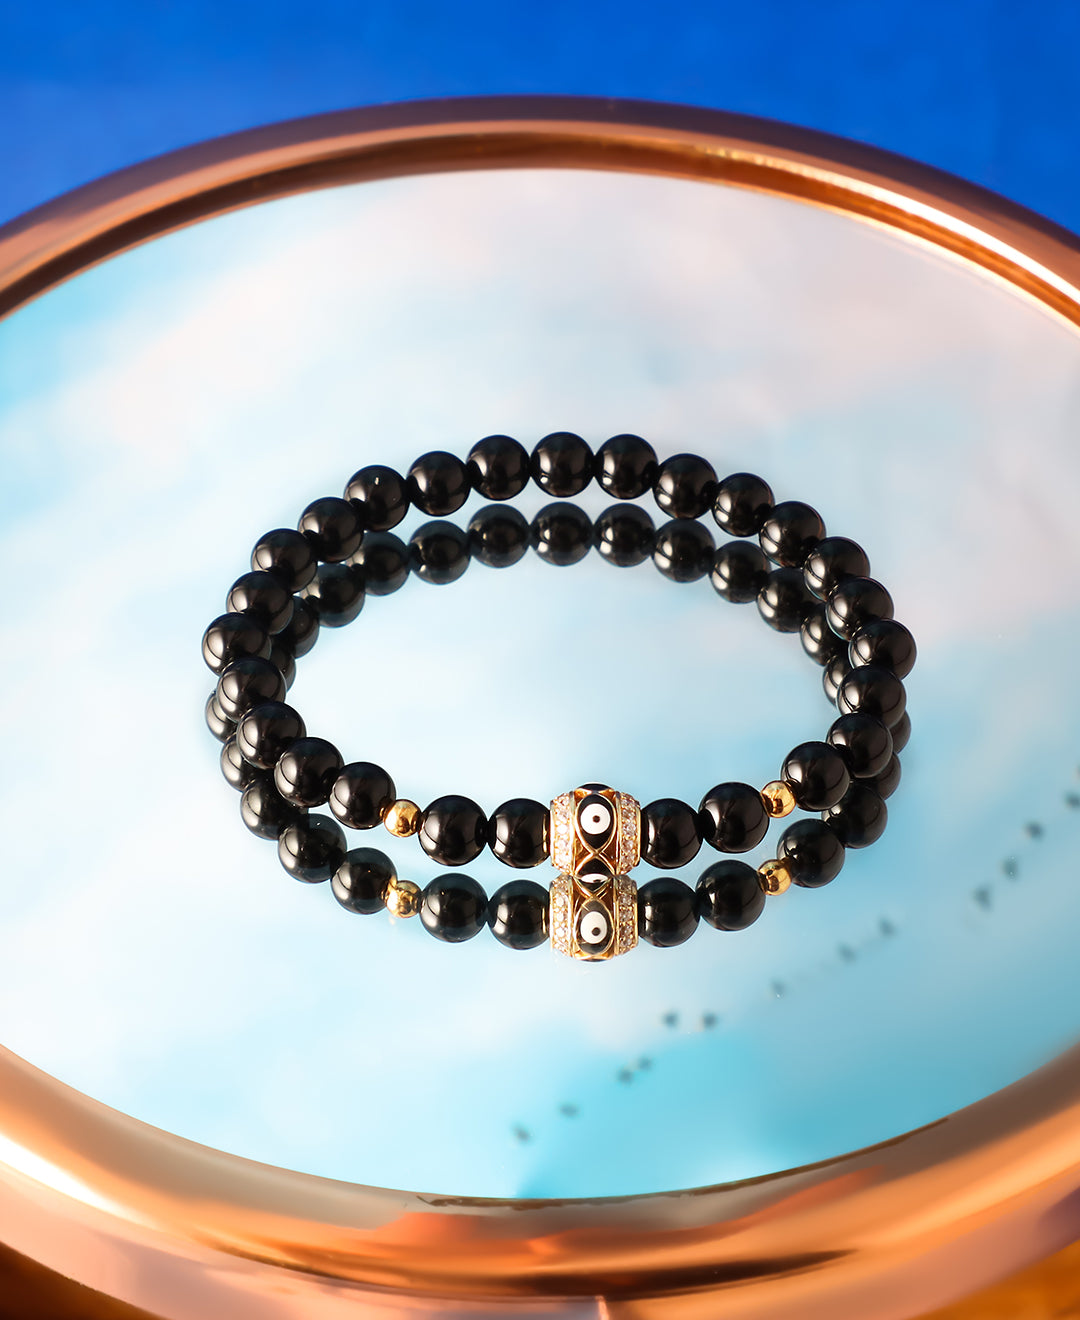 Handmade Stretchable Friendship Bracelet with Black Onyx and Hematite Gemstones